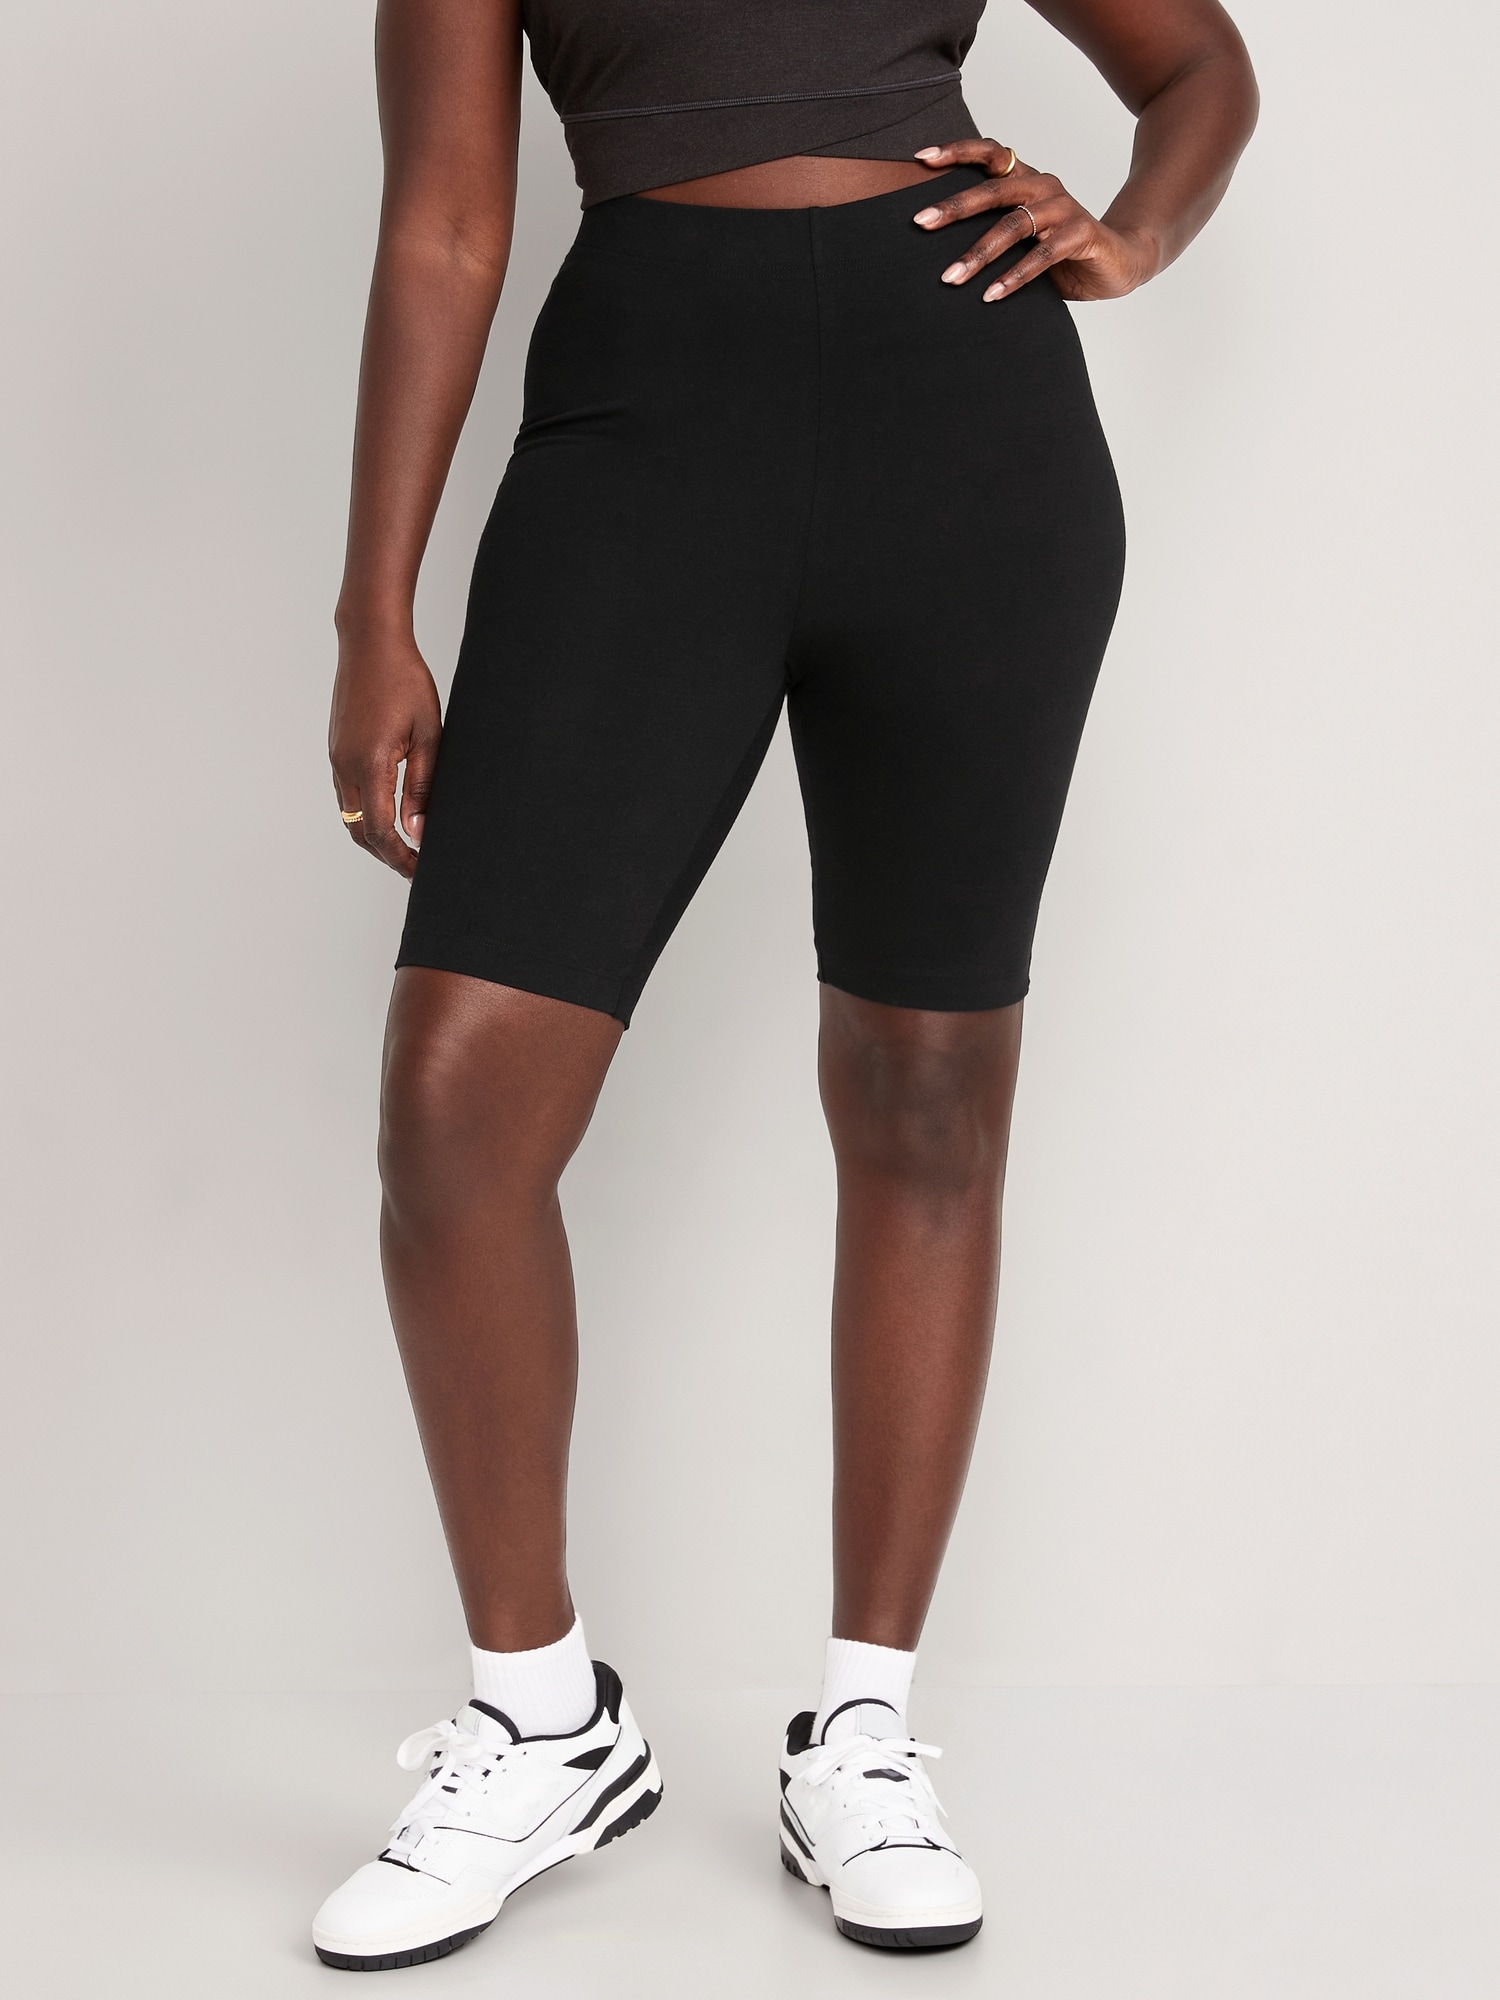 Extra High-Waisted Long Biker Shorts for Women -- 10-inch inseam